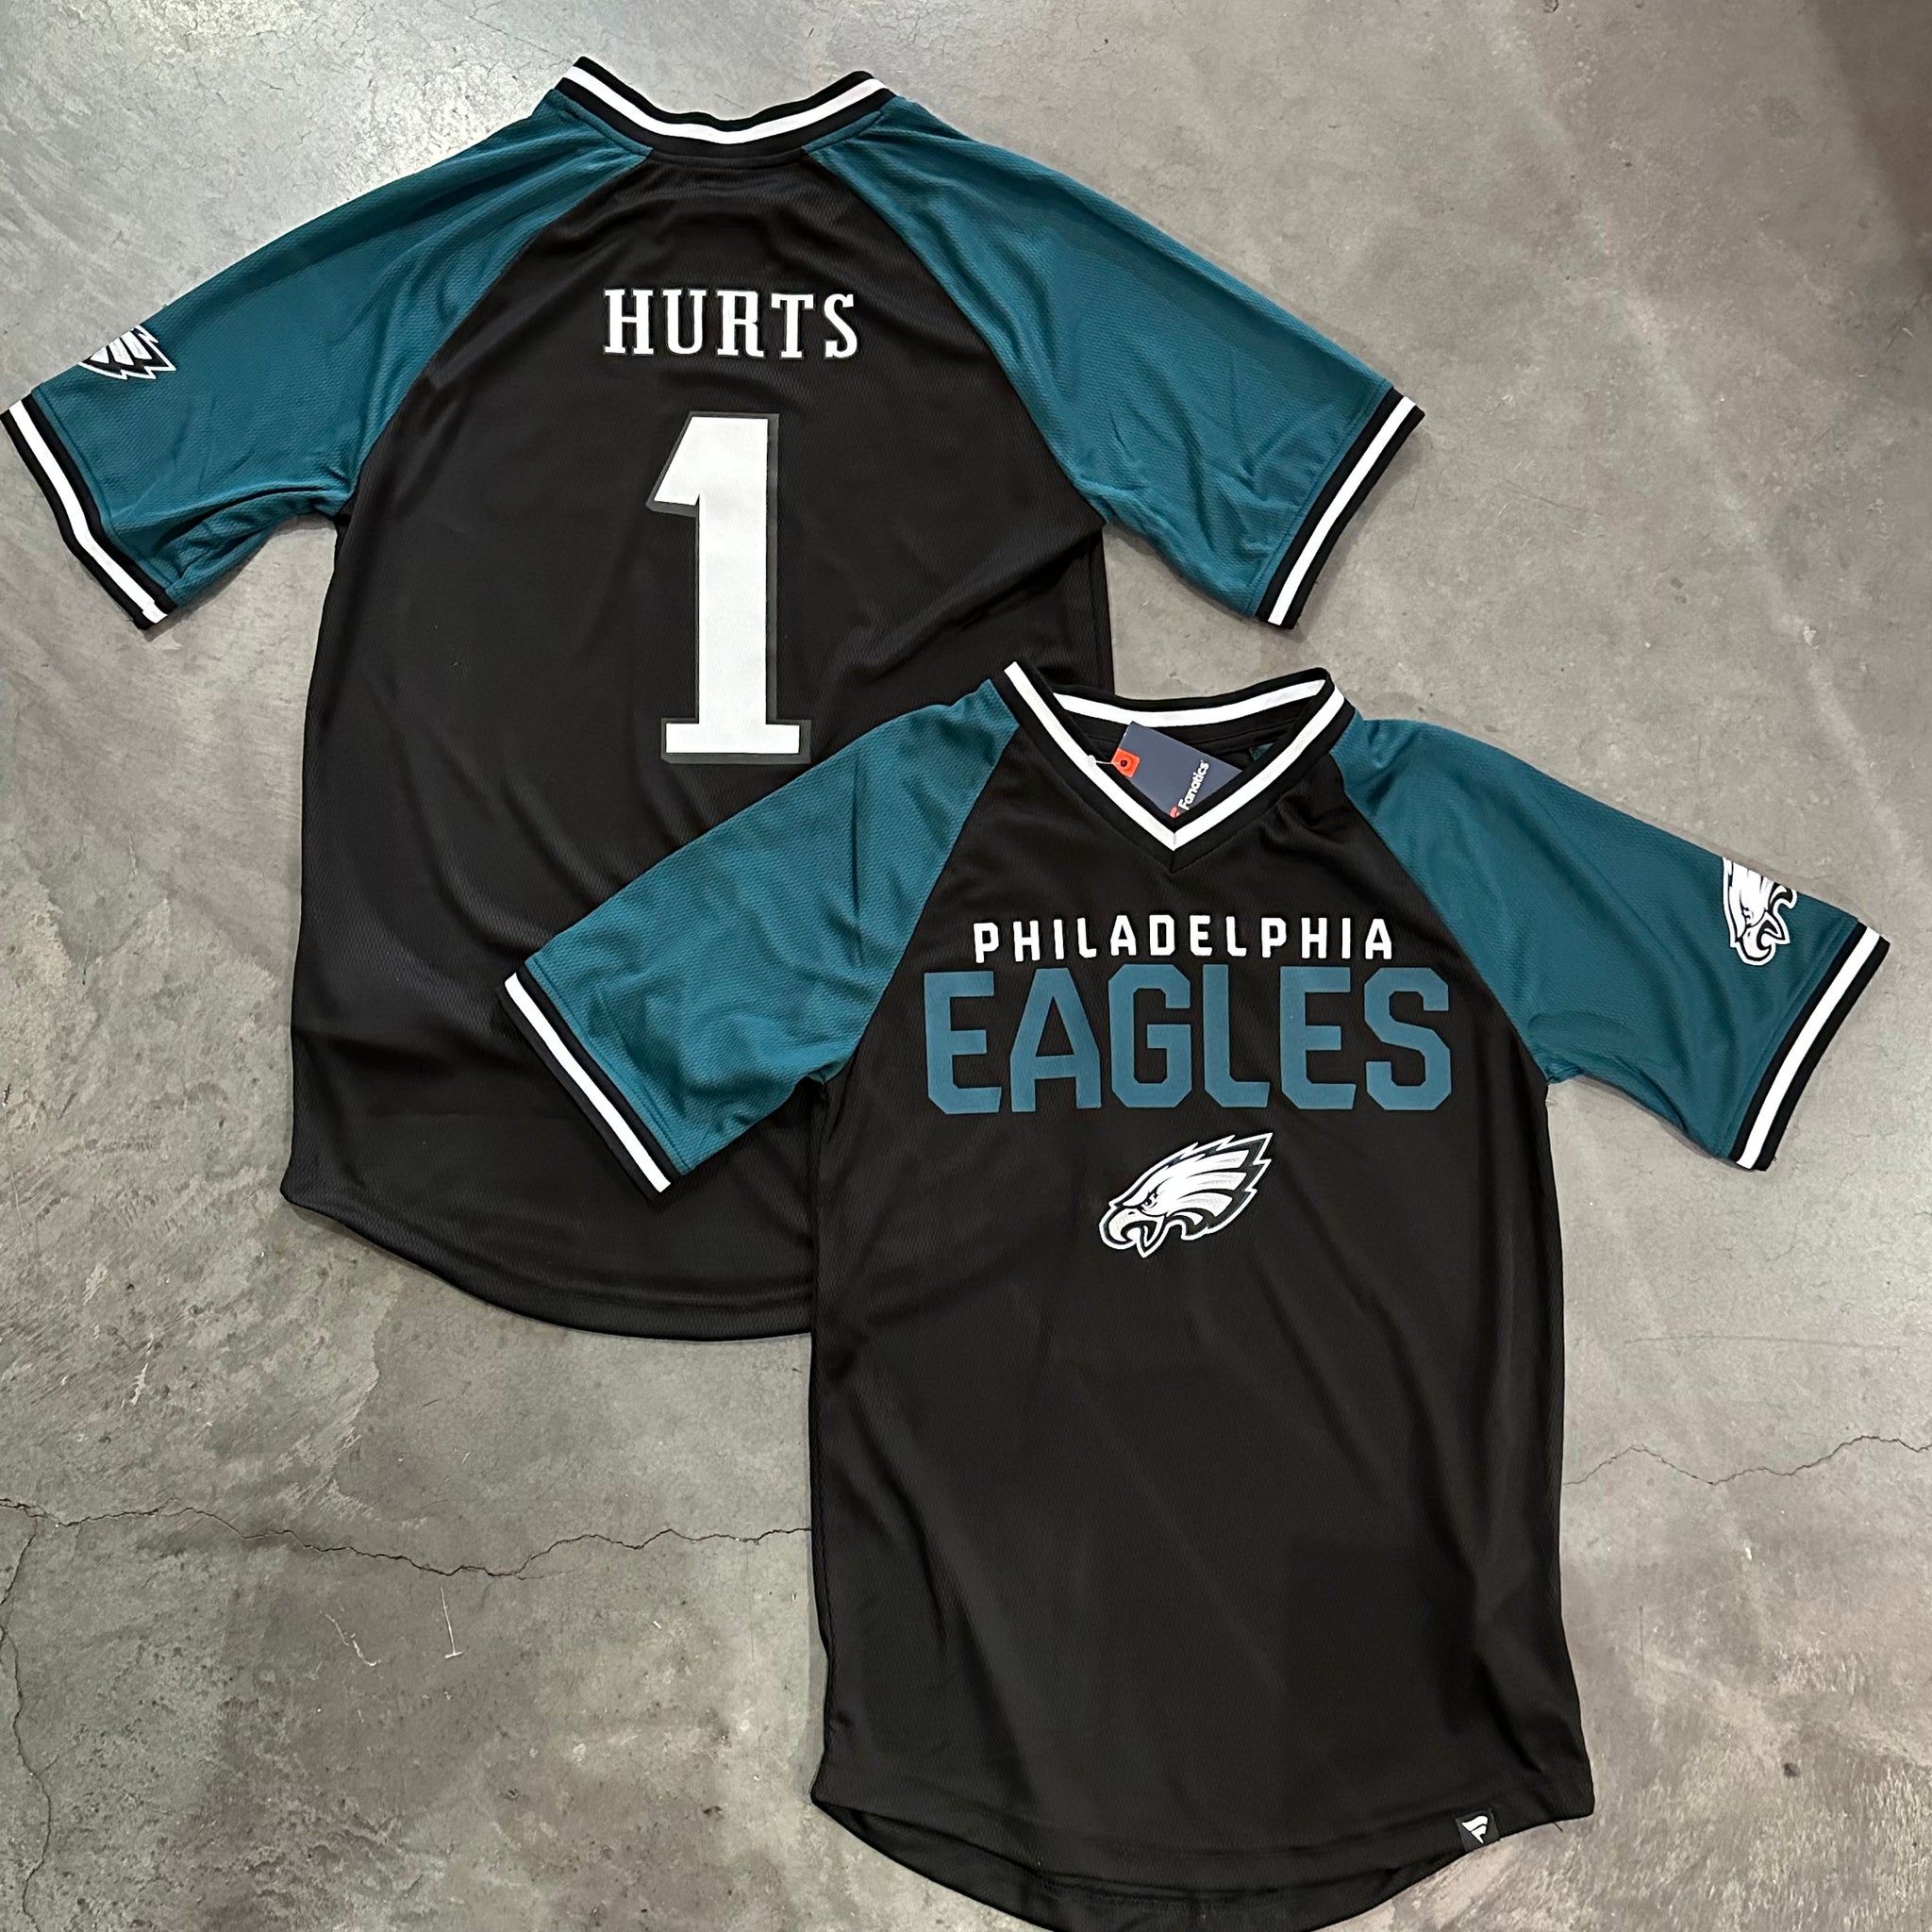 Philadelphia Eagles Hurts V Neck Fashion Shirt